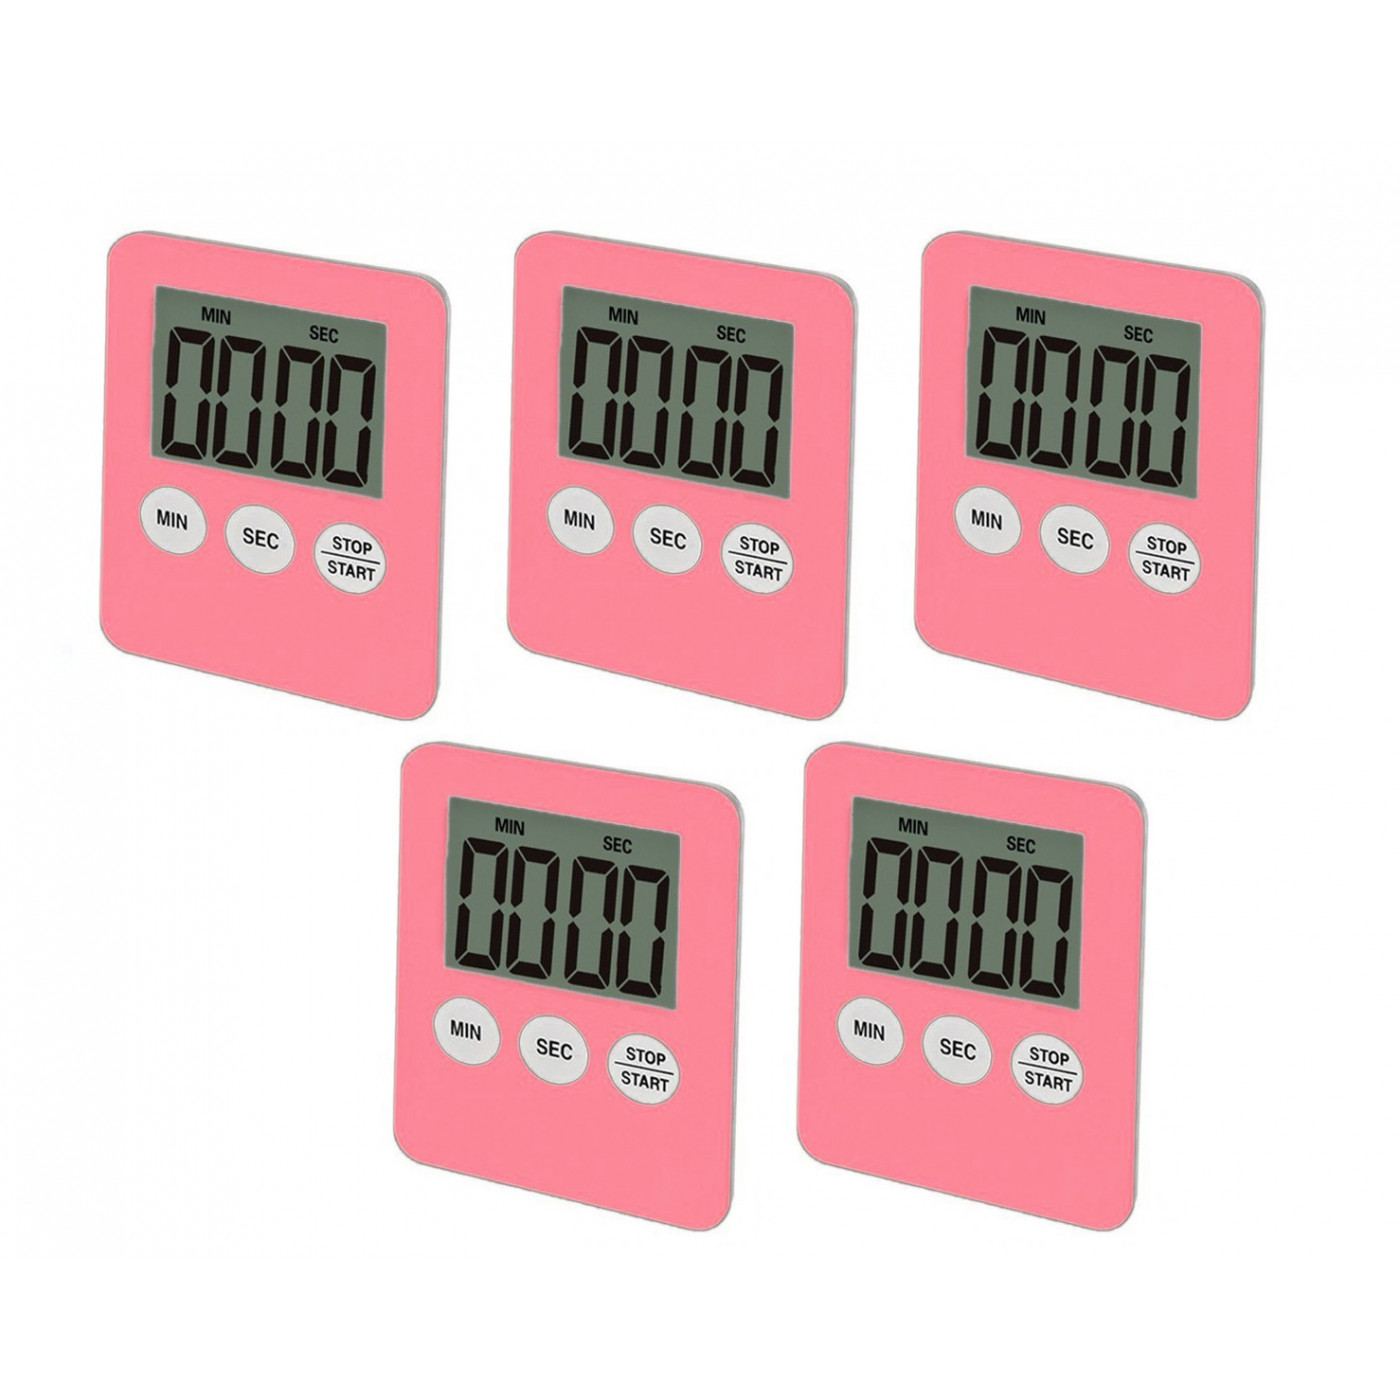 Set of 5 digital timers, alarm clocks, pink